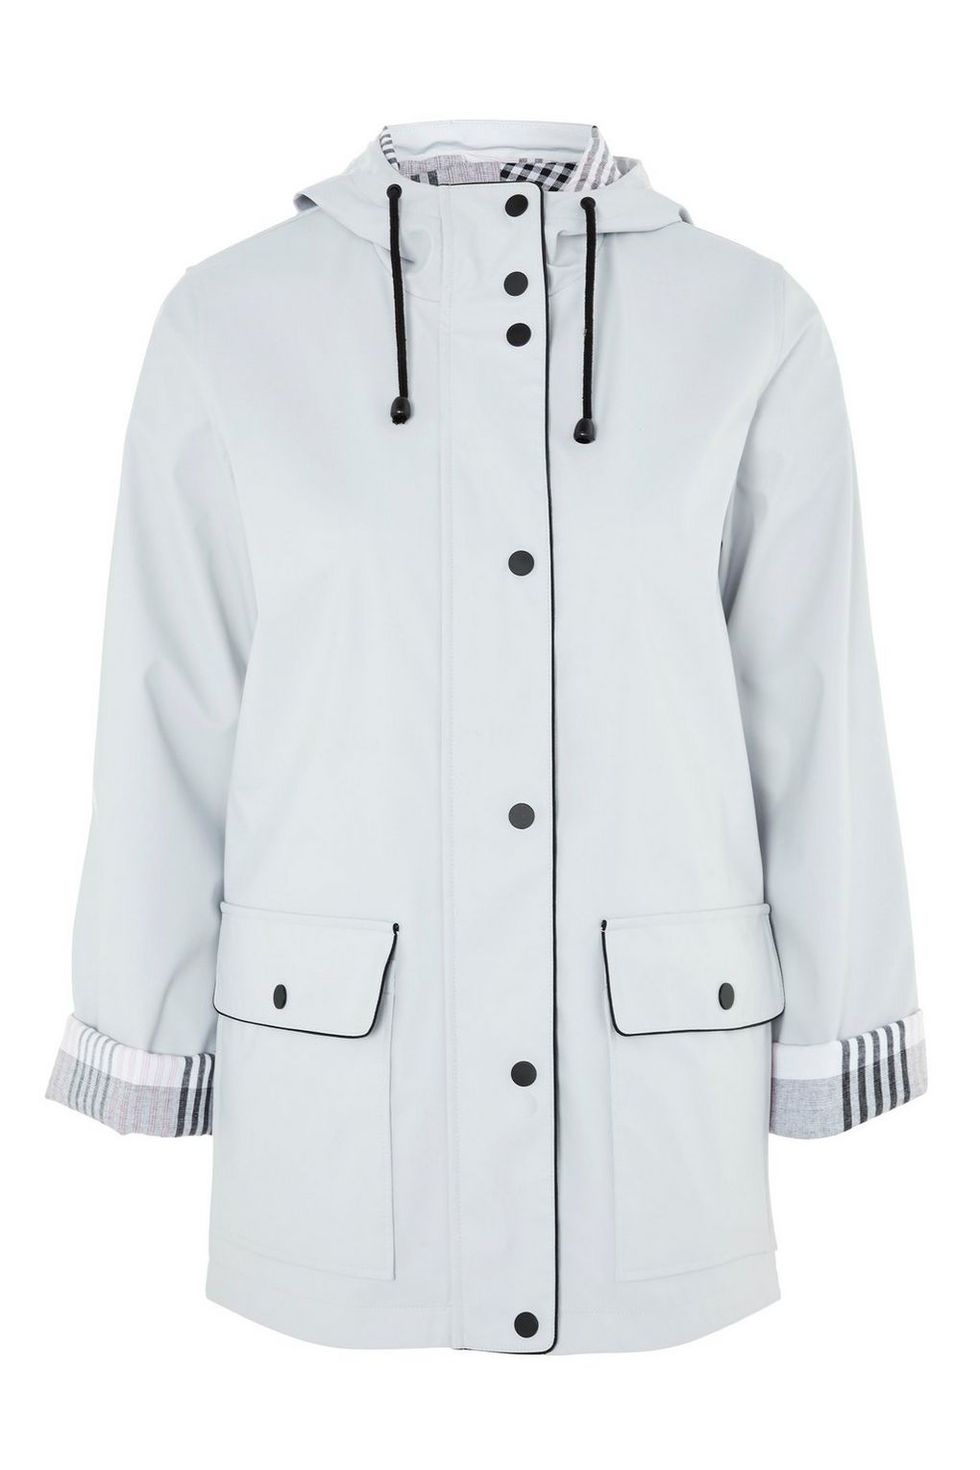 Clothing, Outerwear, White, Coat, Hood, Sleeve, Jacket, Trench coat, Overcoat, Collar, 